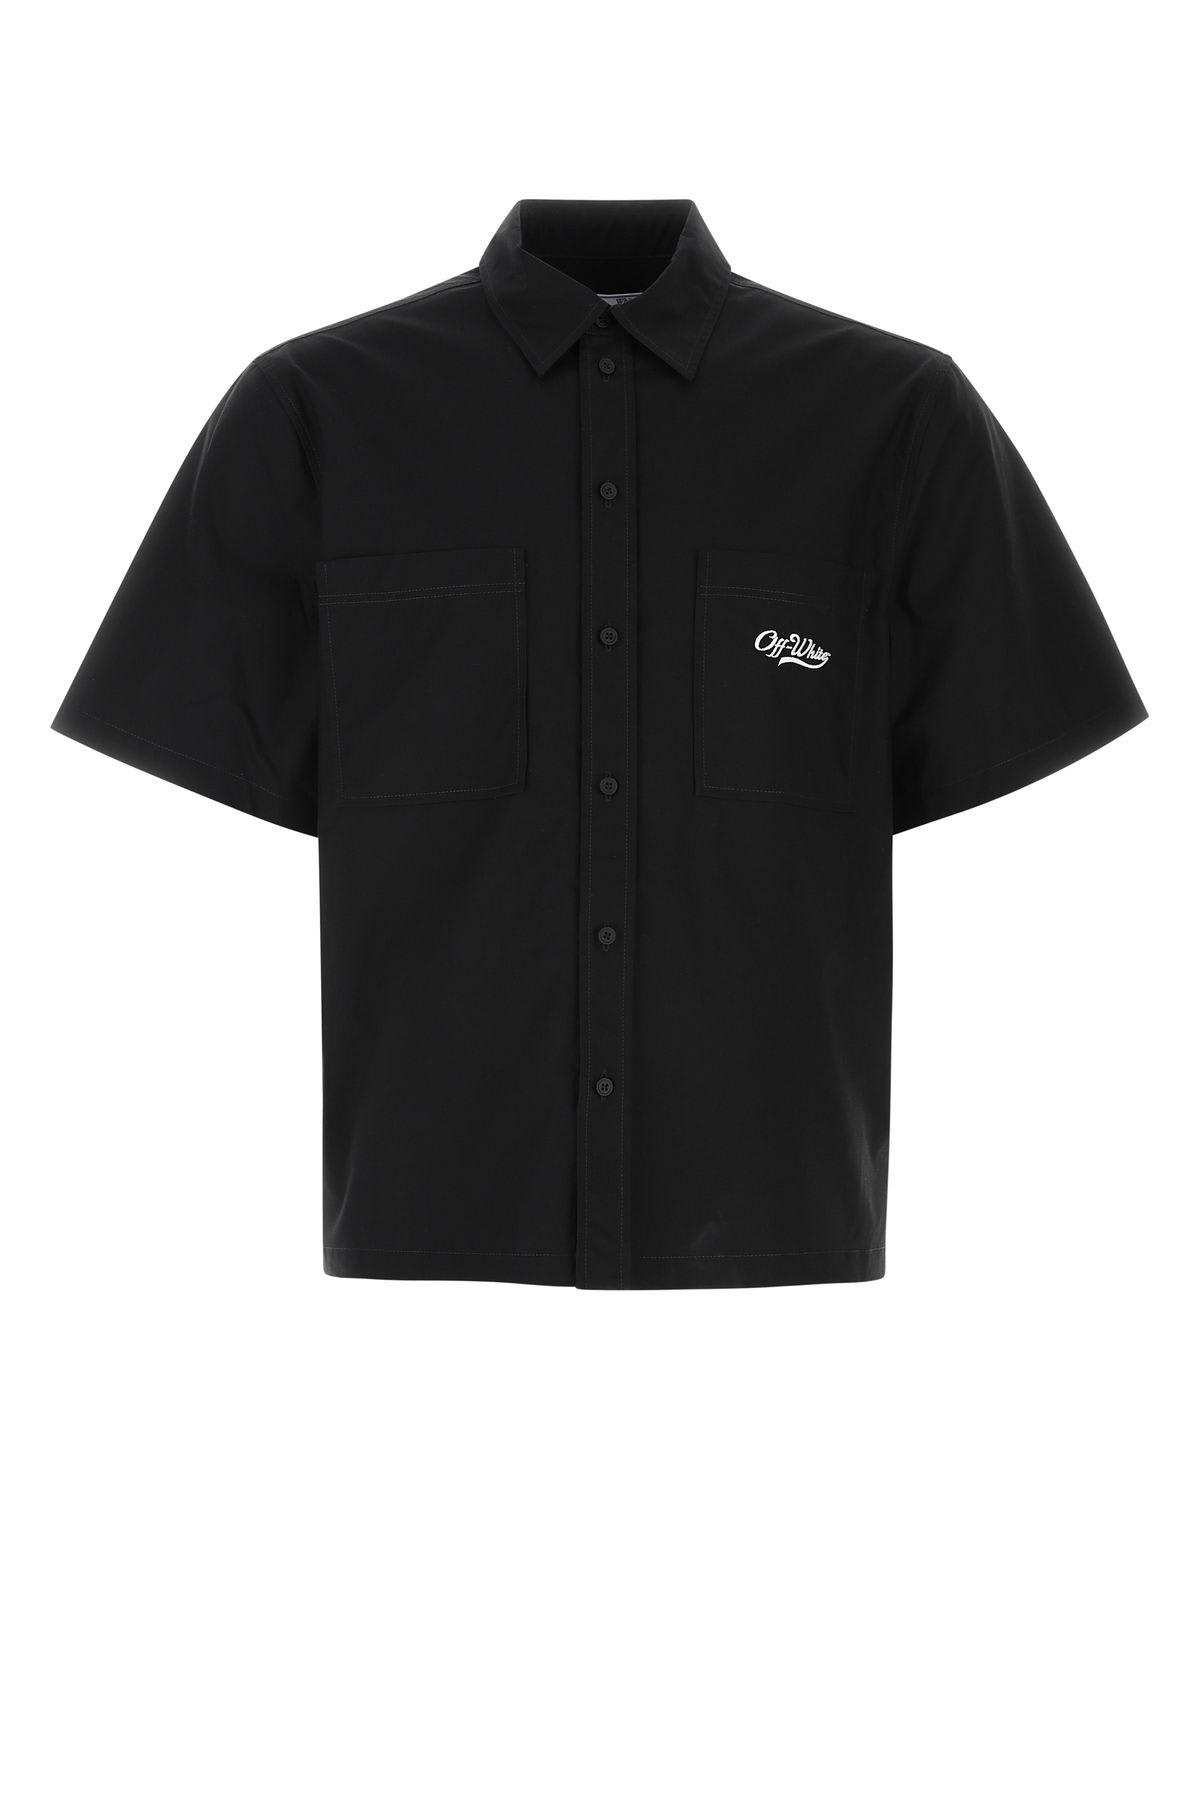 Off-White Black Poplin Shirt